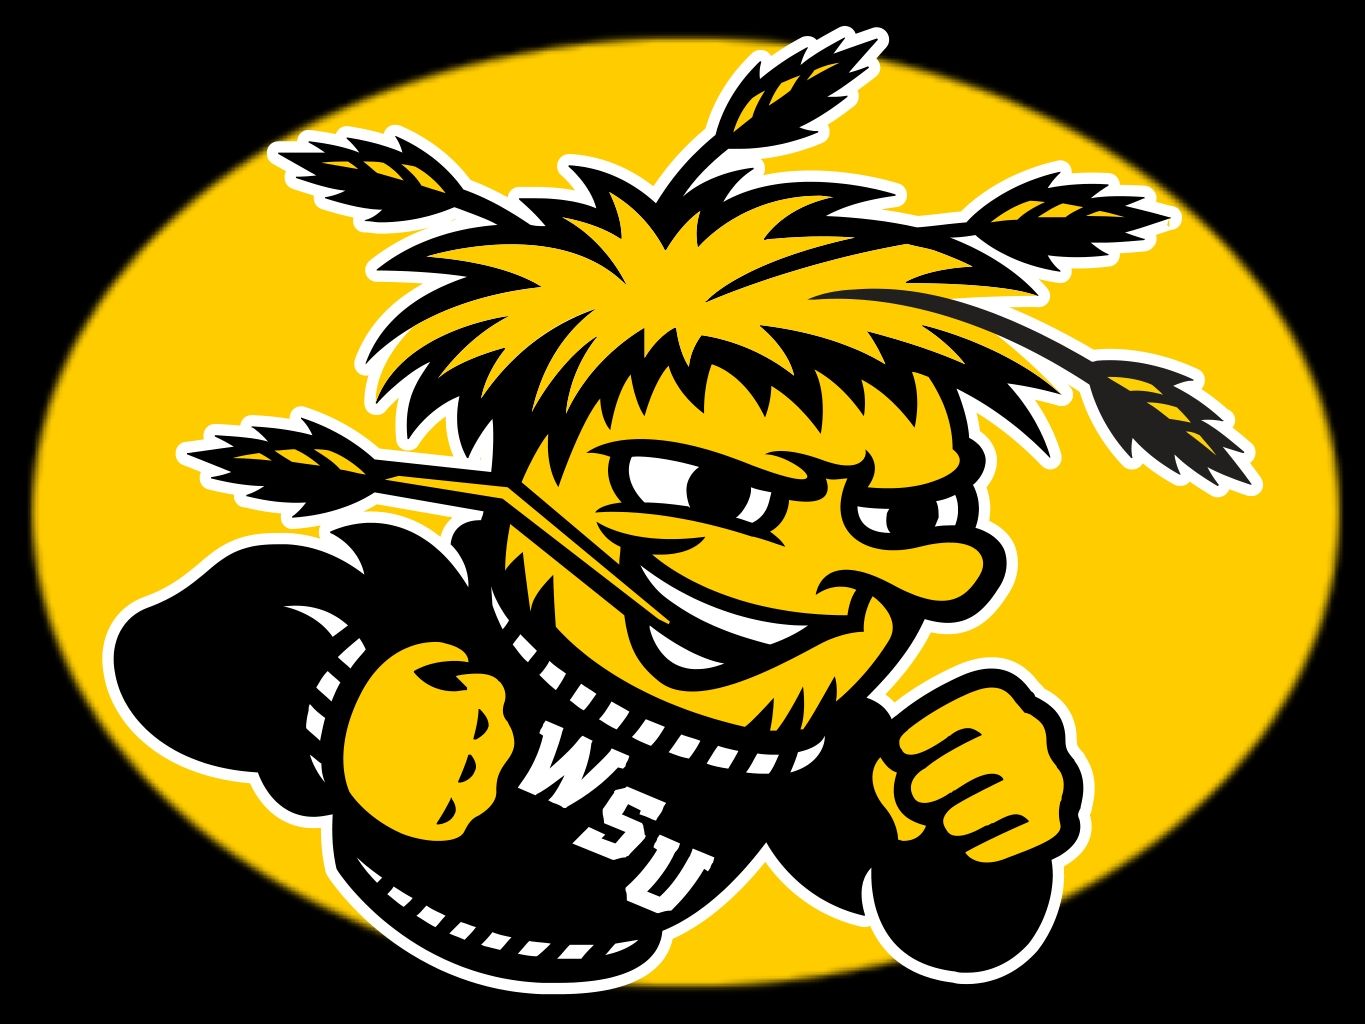 Wichita state university Logos